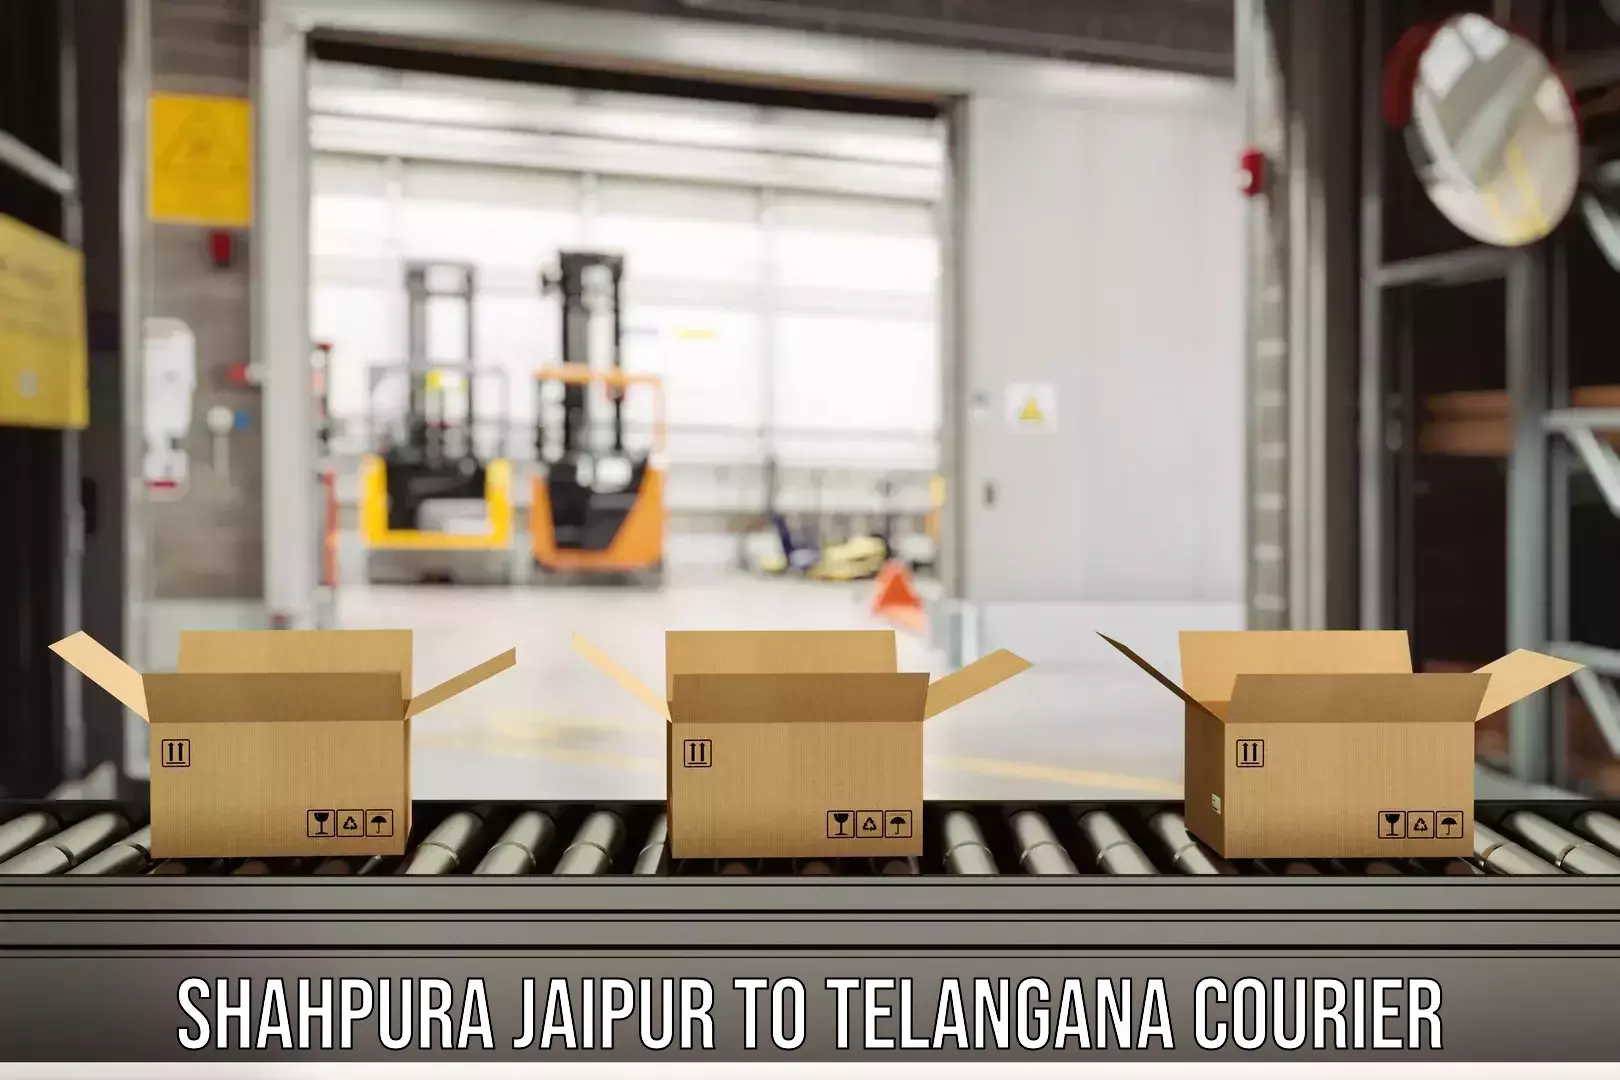 Courier service innovation Shahpura Jaipur to Nalgonda